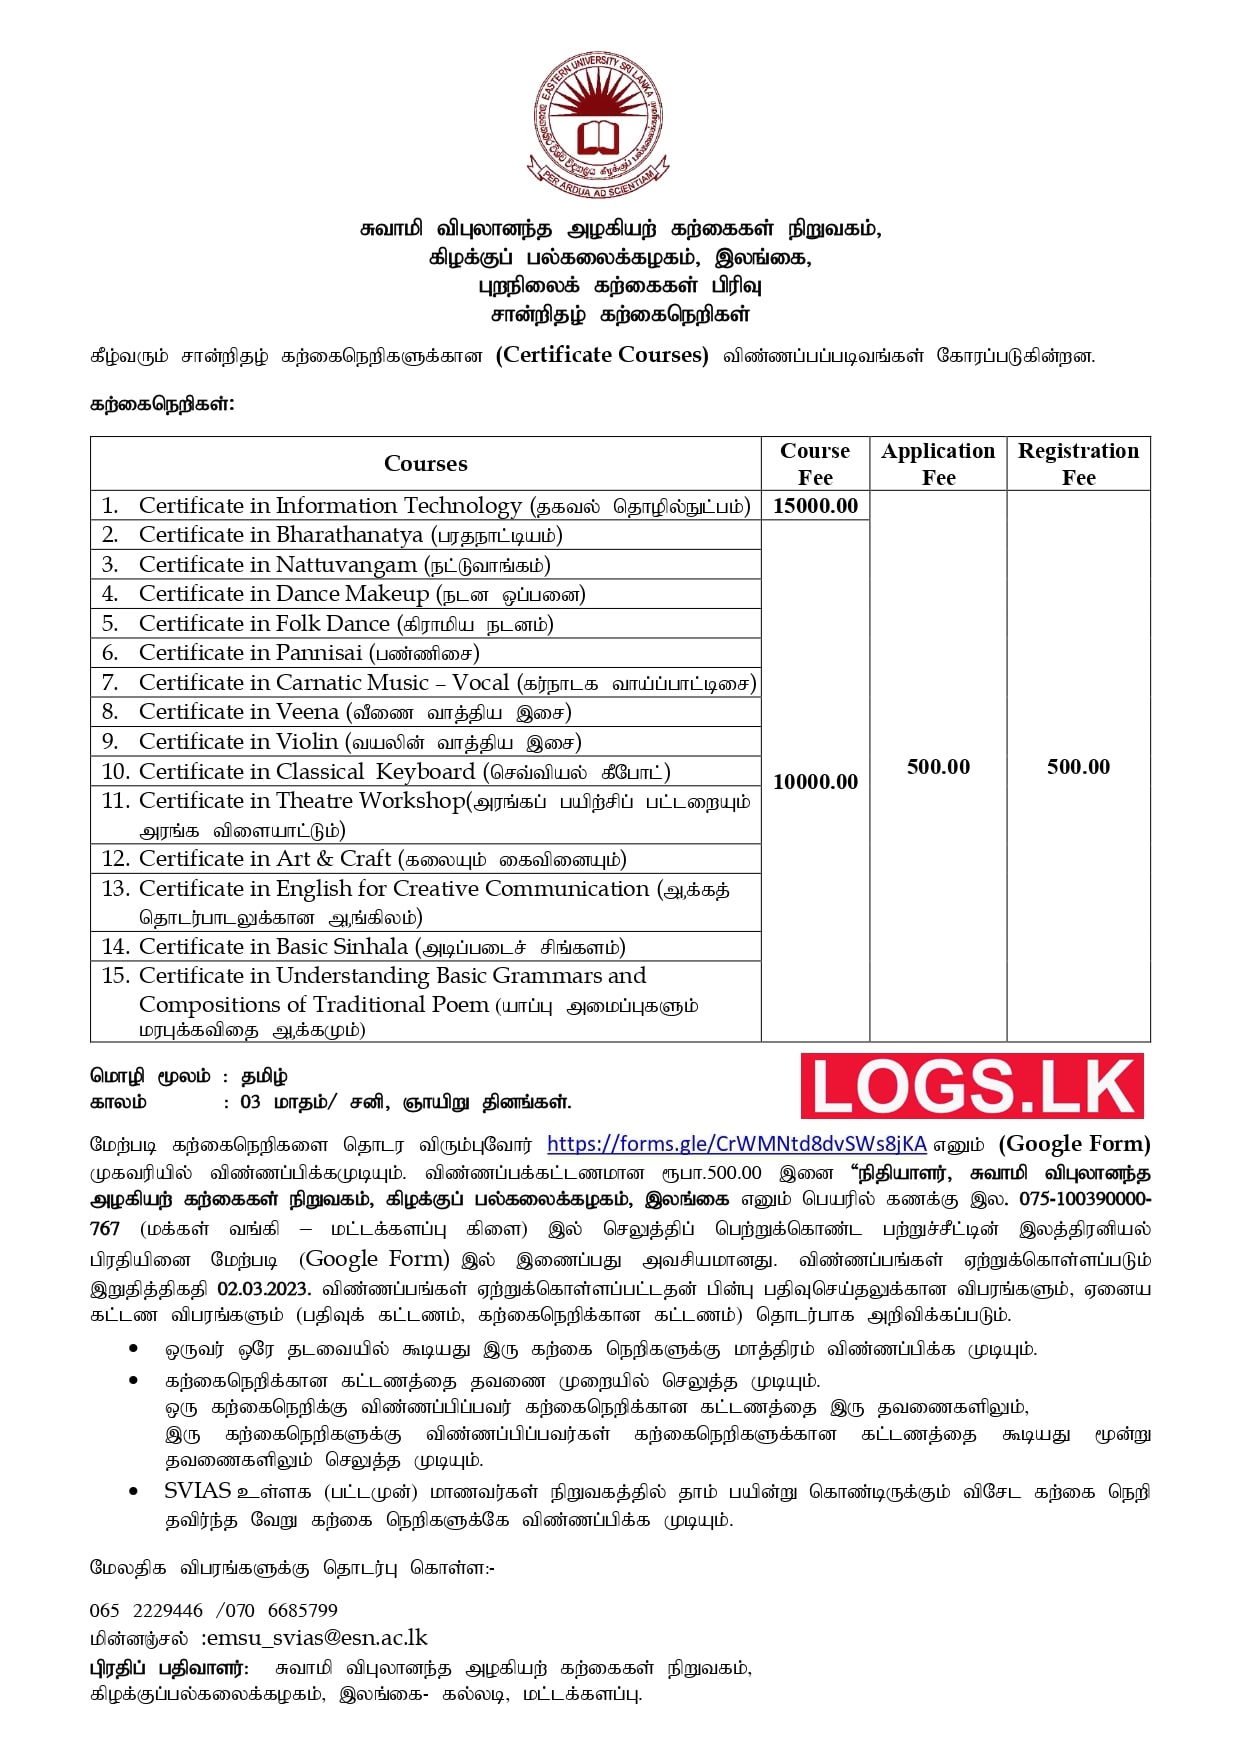 Swamy Vipulananda Institute of Aesthetic Studies Courses 2023 Apply Online, Download Gazette Details & Application Form.